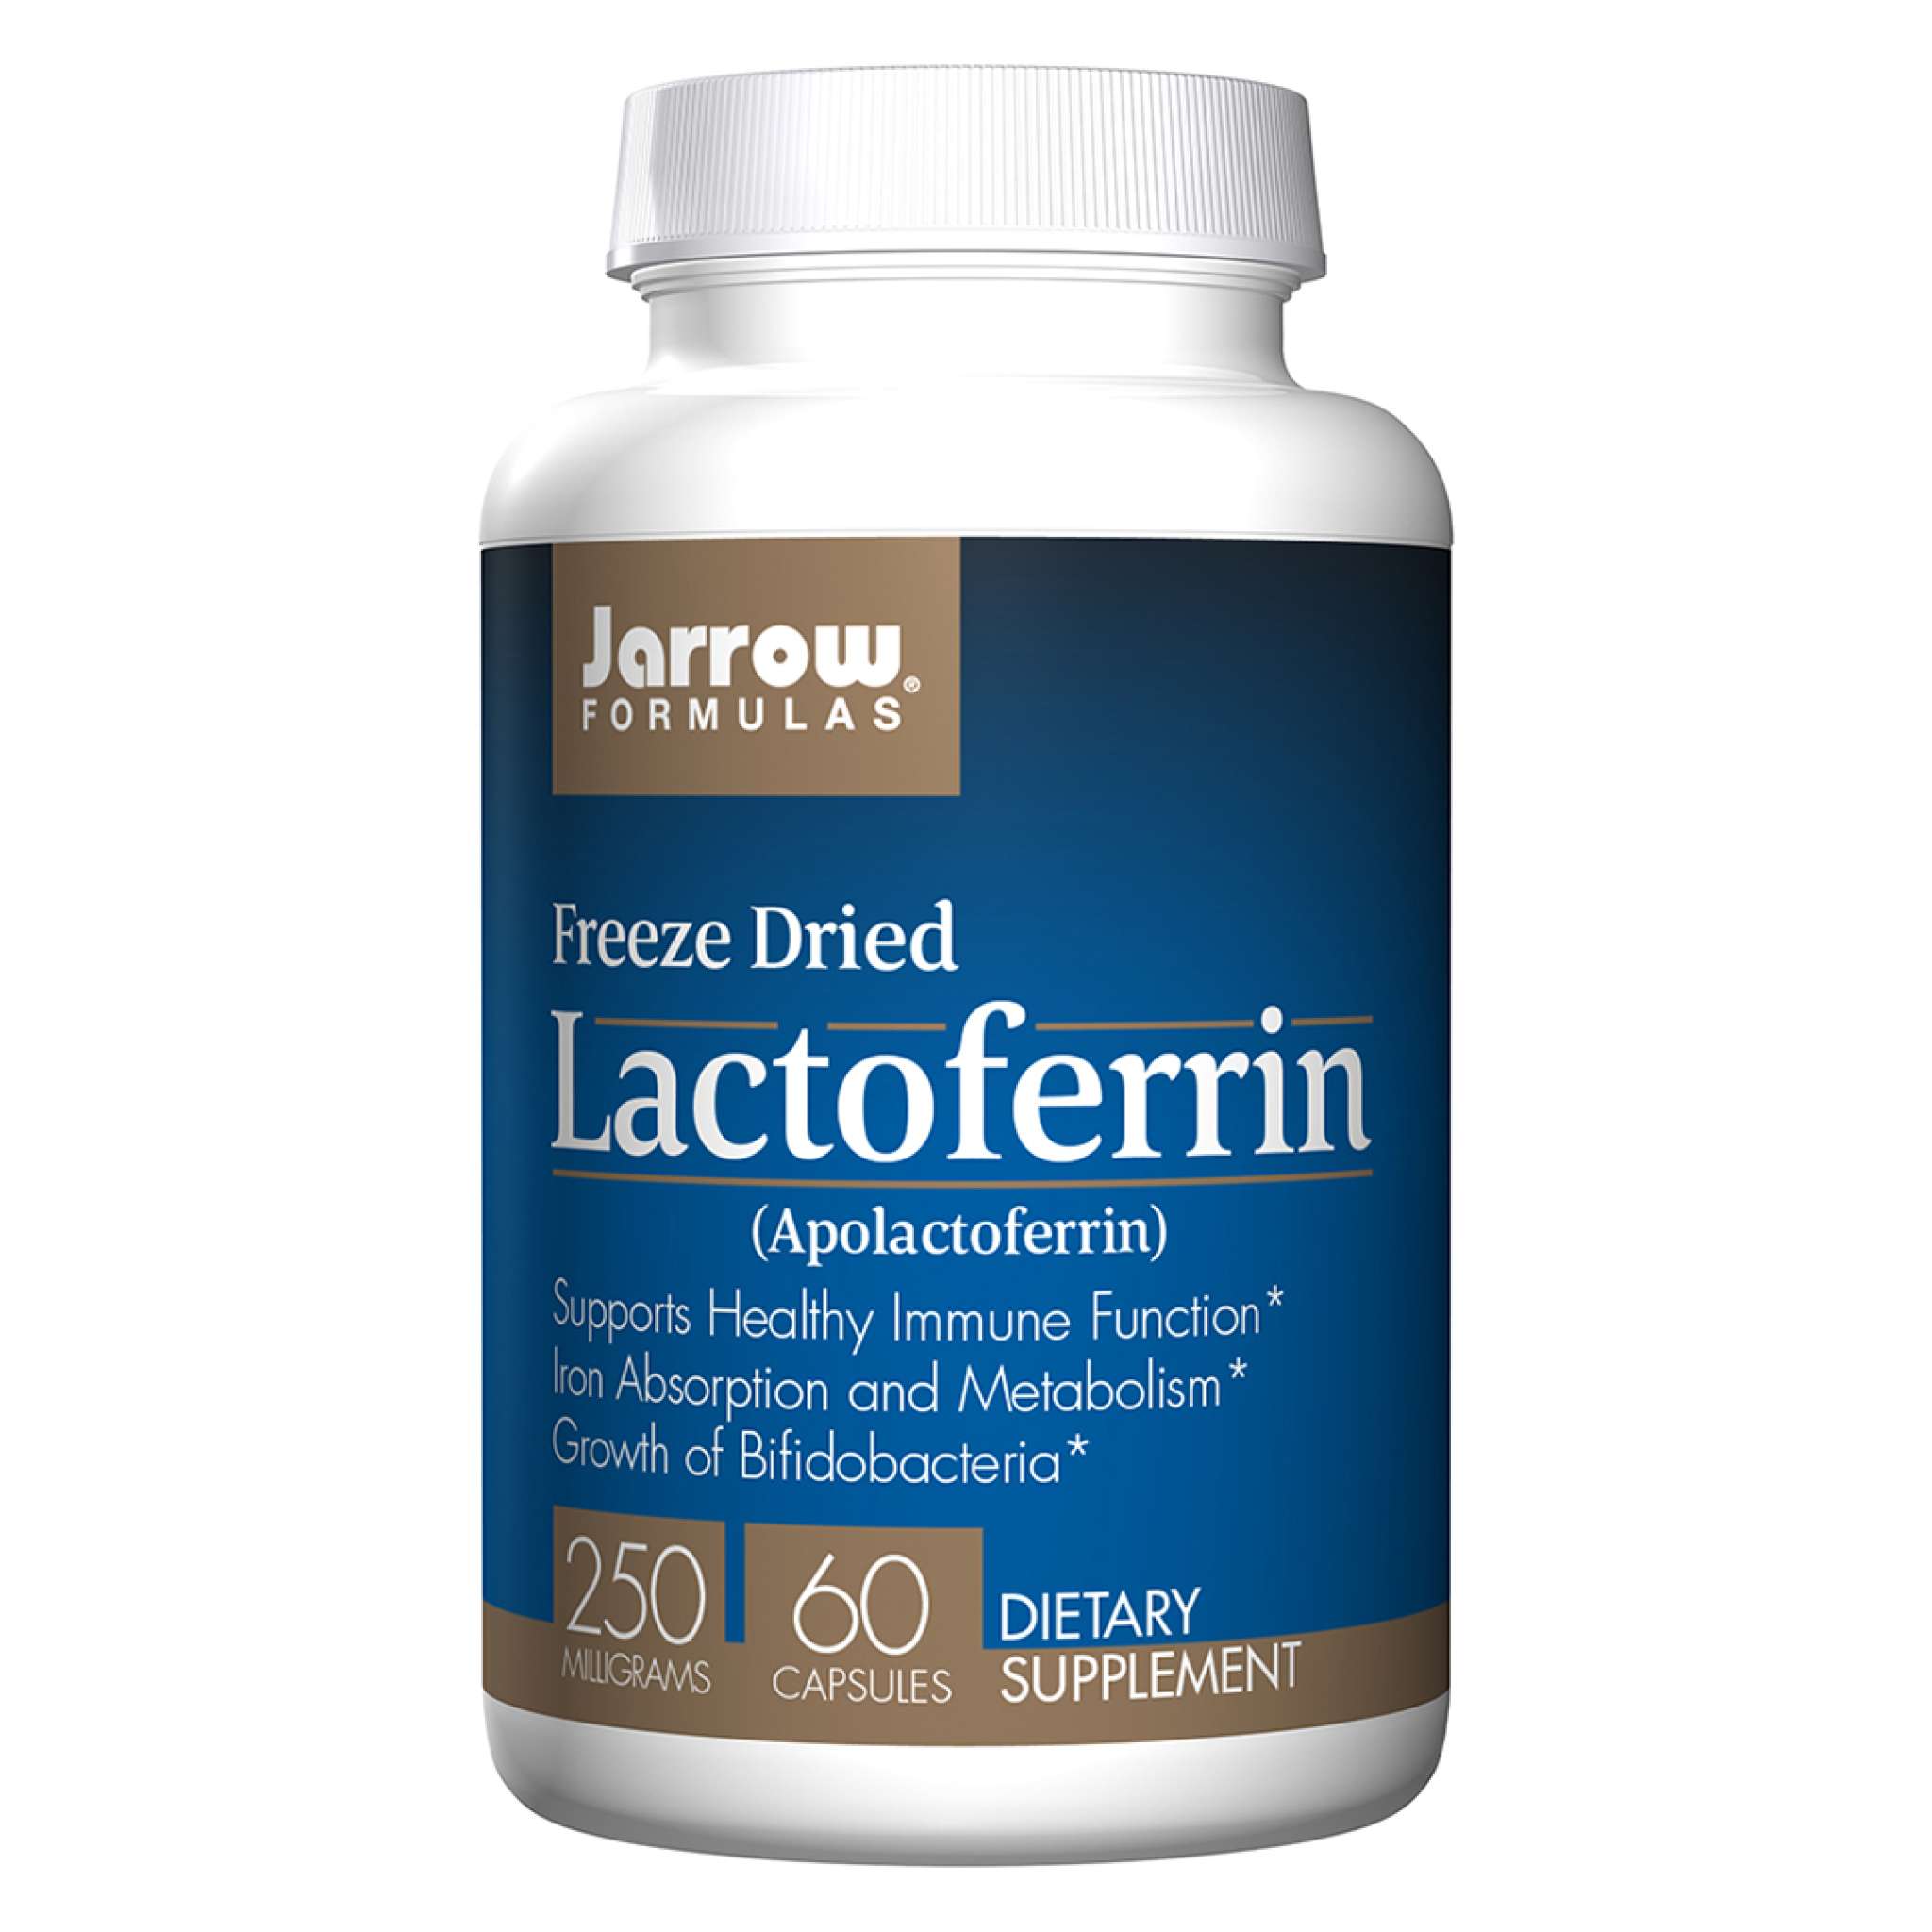 Jarrow Formulas - Lactoferrin 250 mg